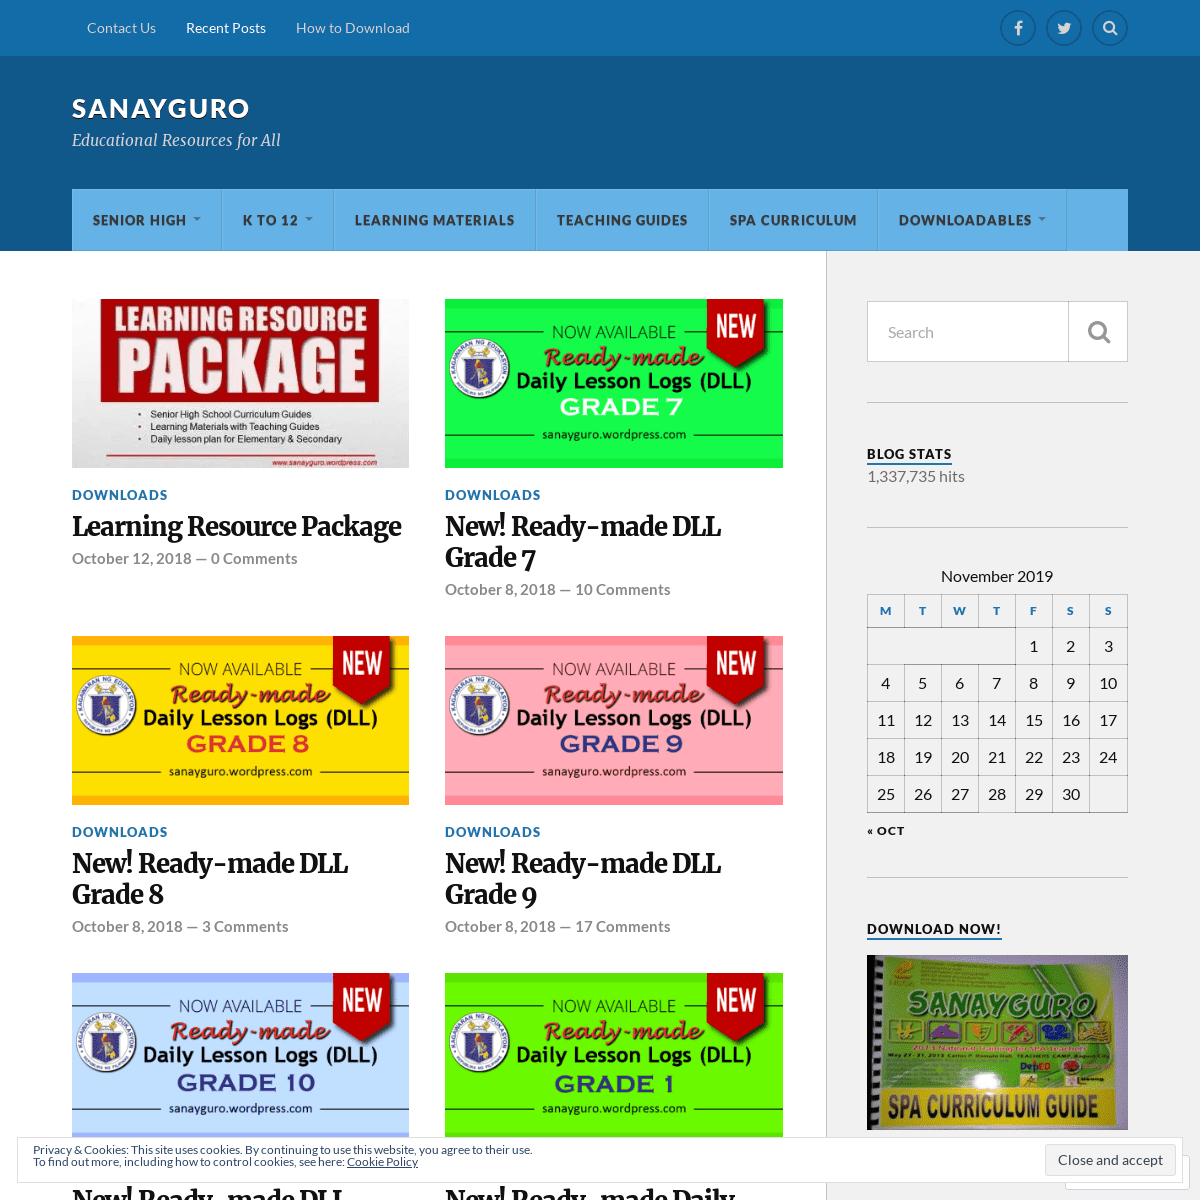 A complete backup of sanayguro.wordpress.com